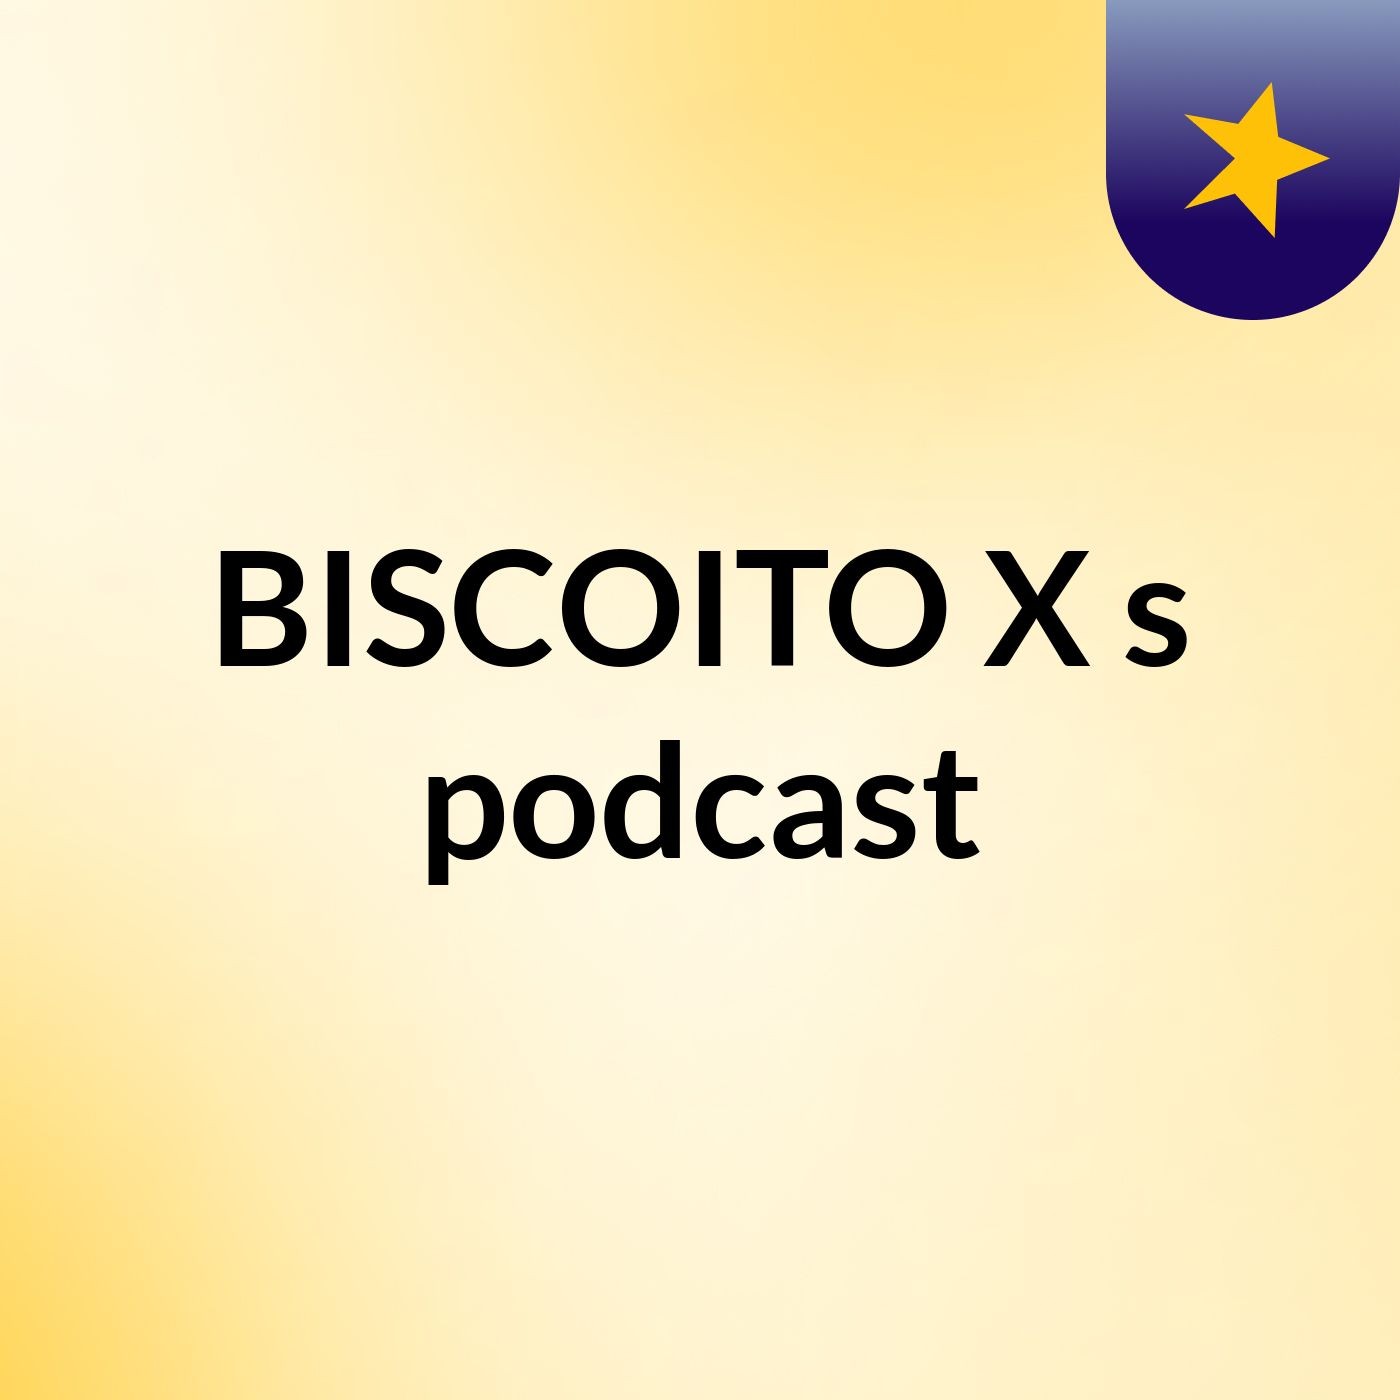 BISCOITO X's podcast